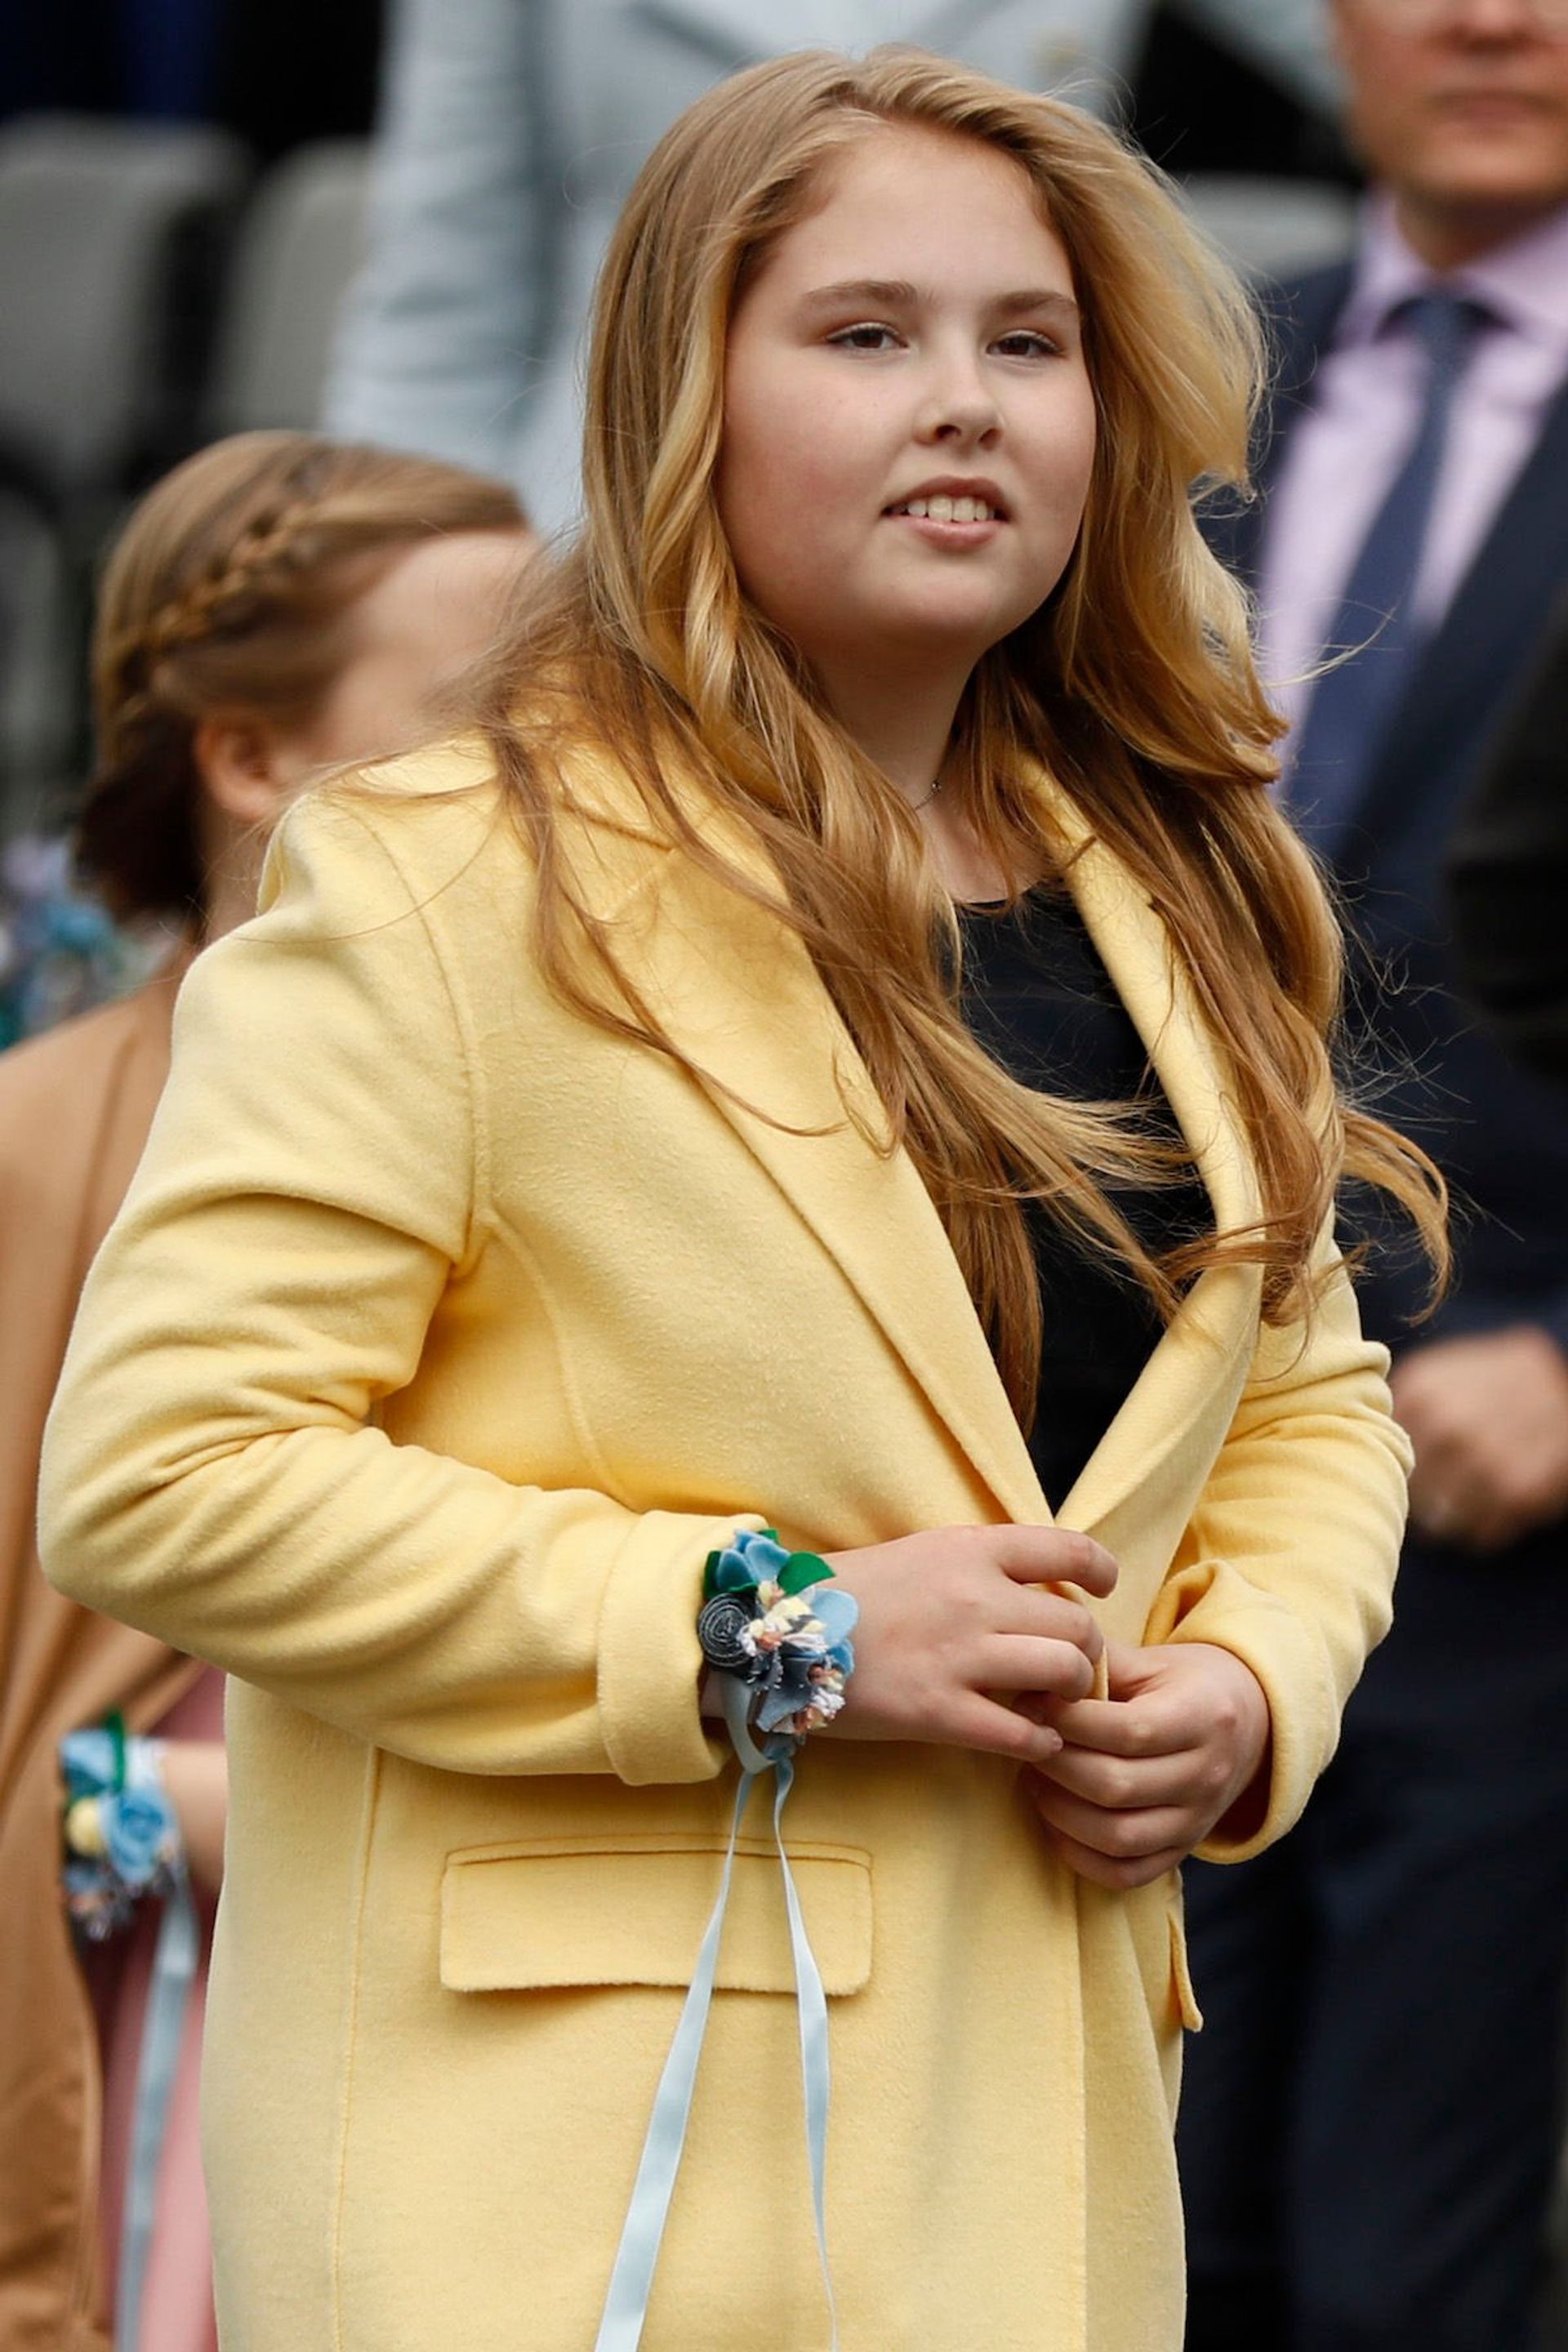 Amalia draagt gele mantel van het merk Zara